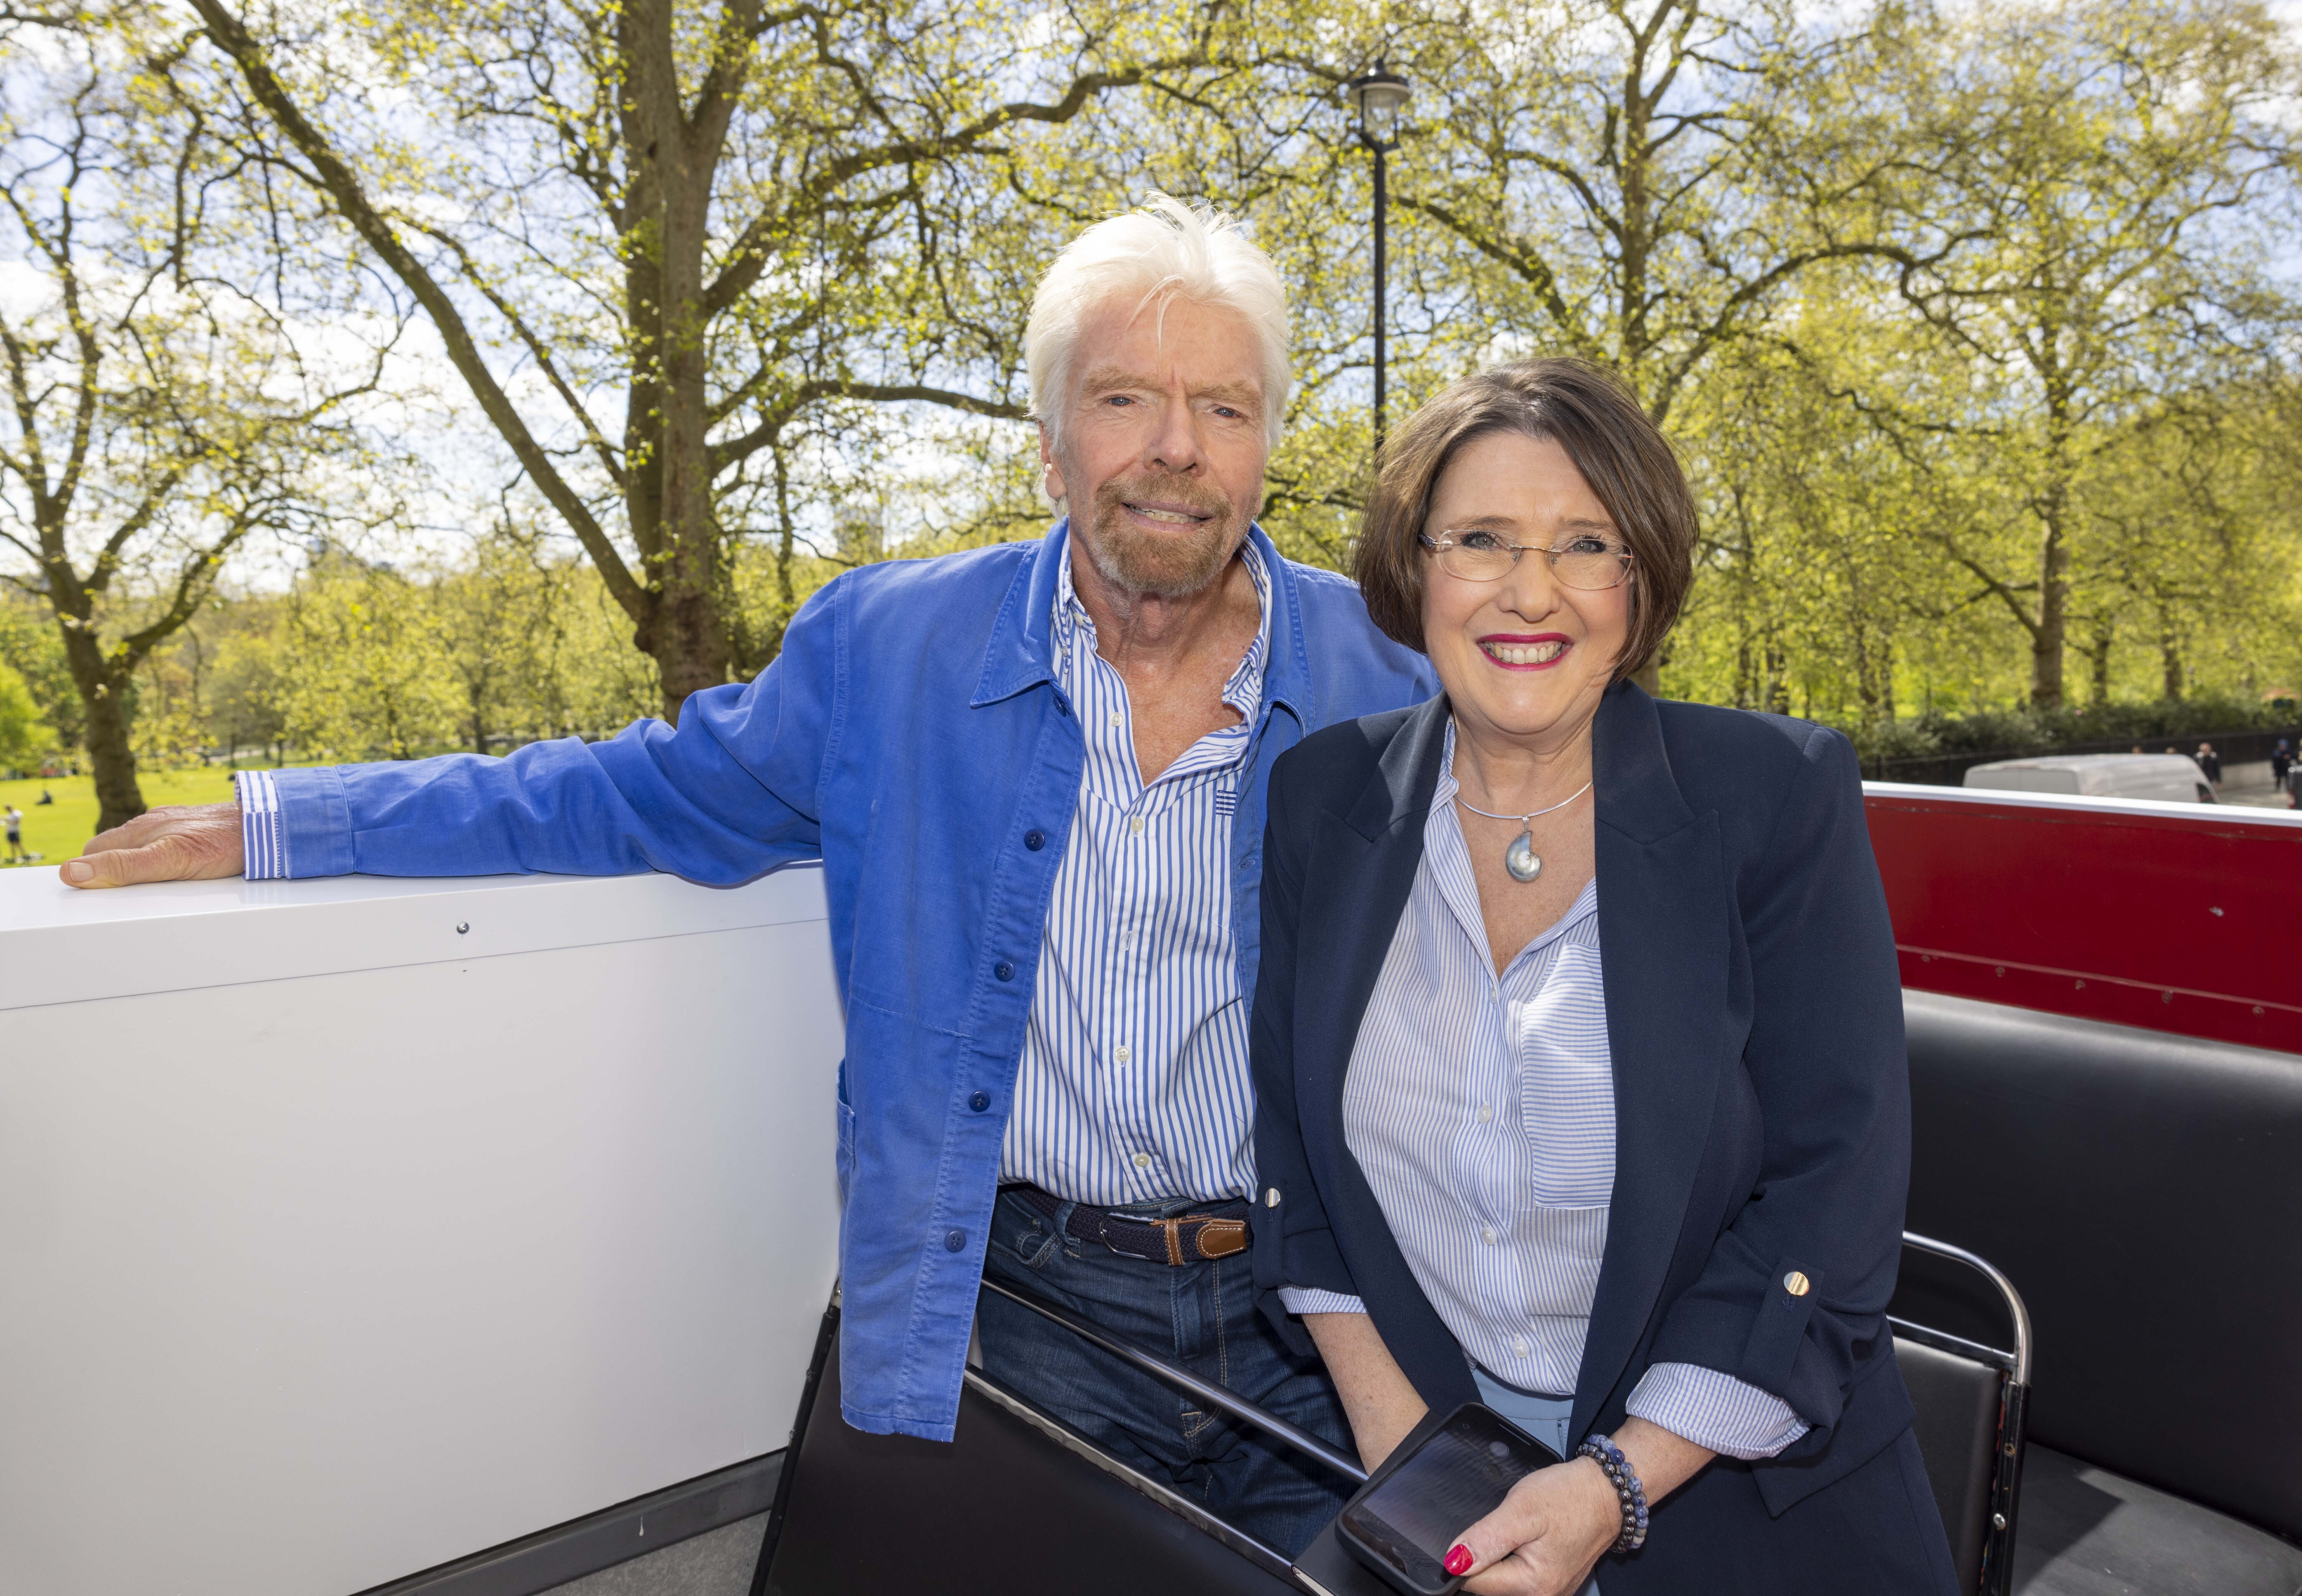 The Sun's Head of Travel Lisa Minot spoke with Sir Richard Branson